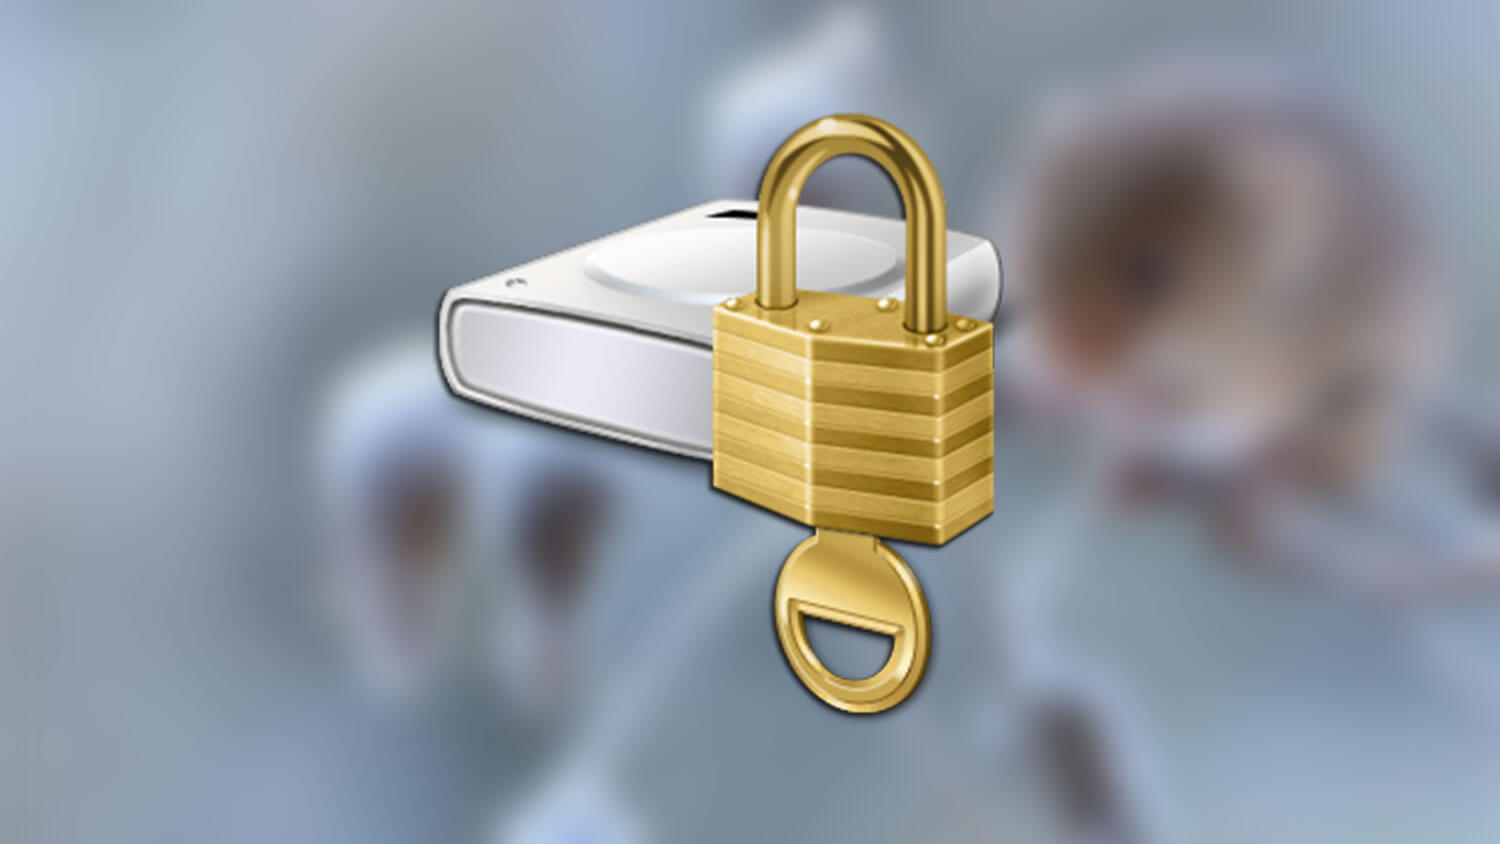 access mac recovery key encryption